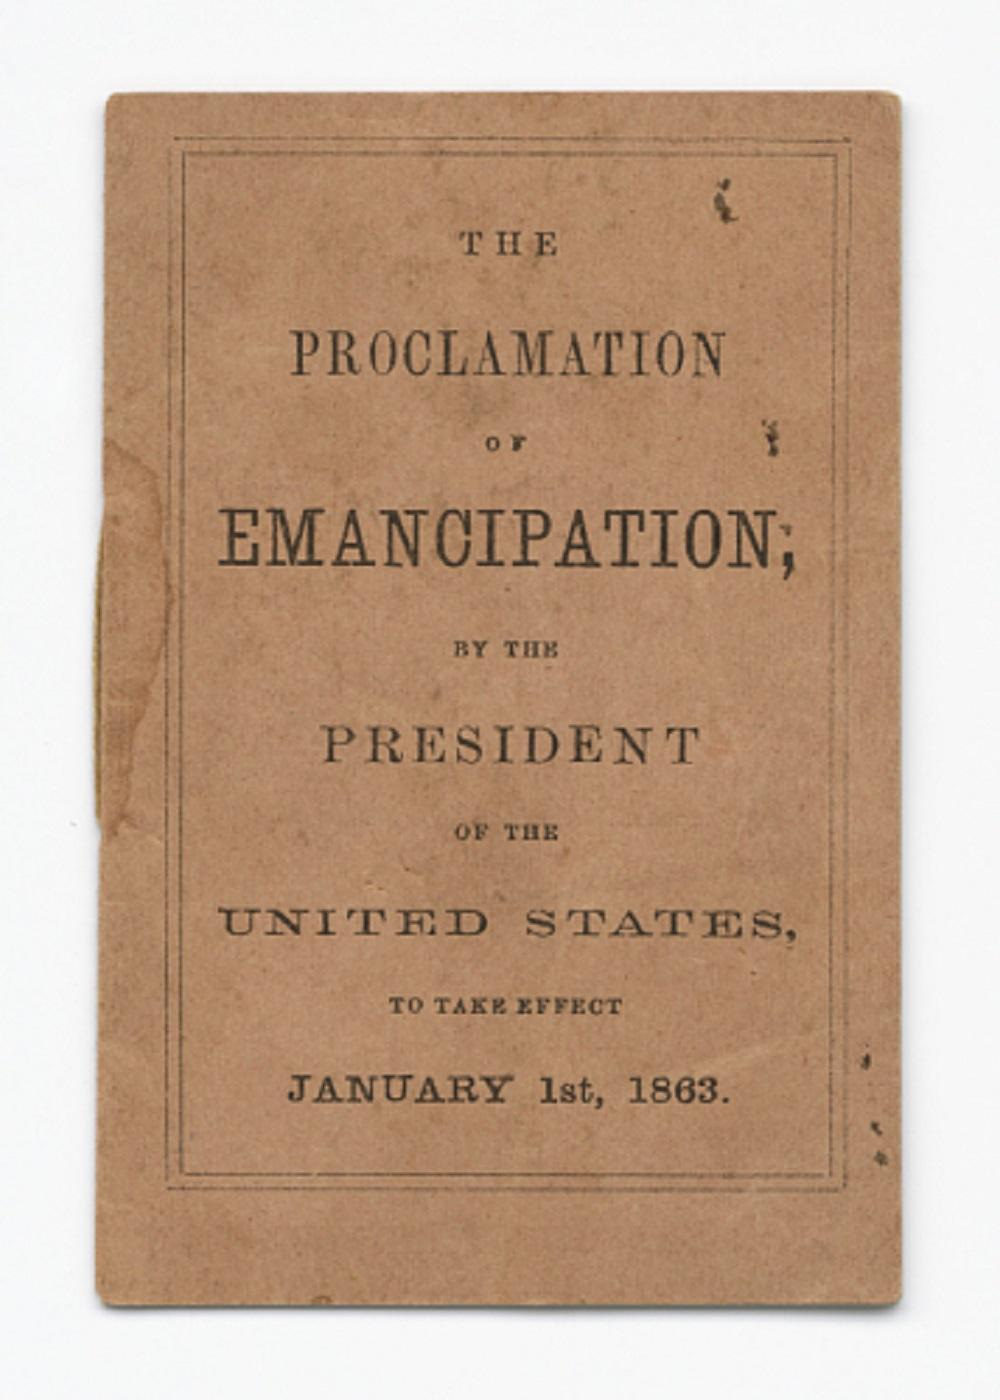 The Proclamation of Emancipation 